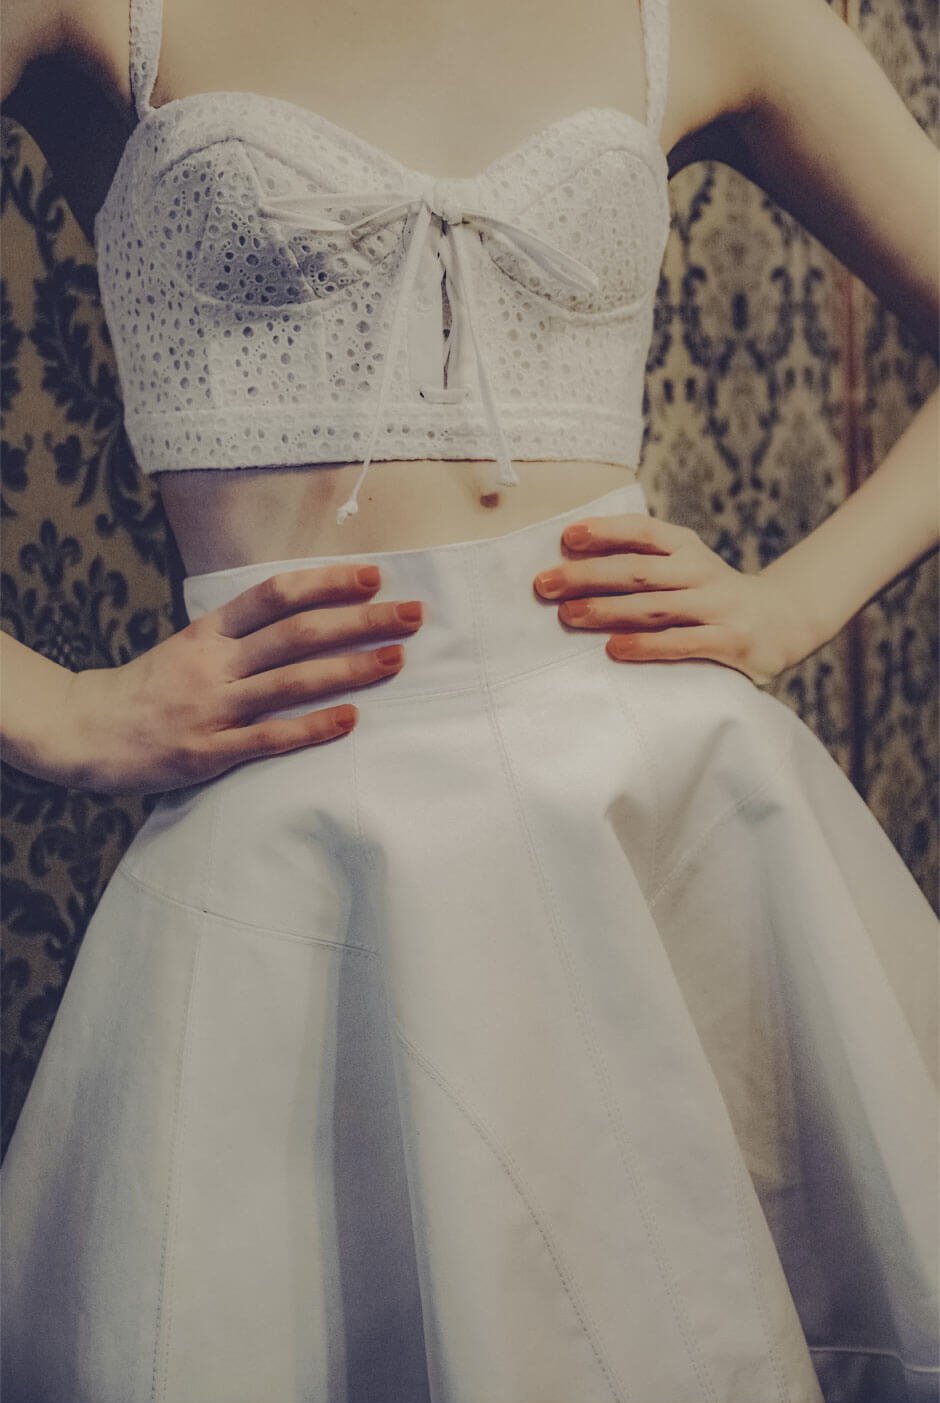 bra and skirt by GIOVANNI BEDIN